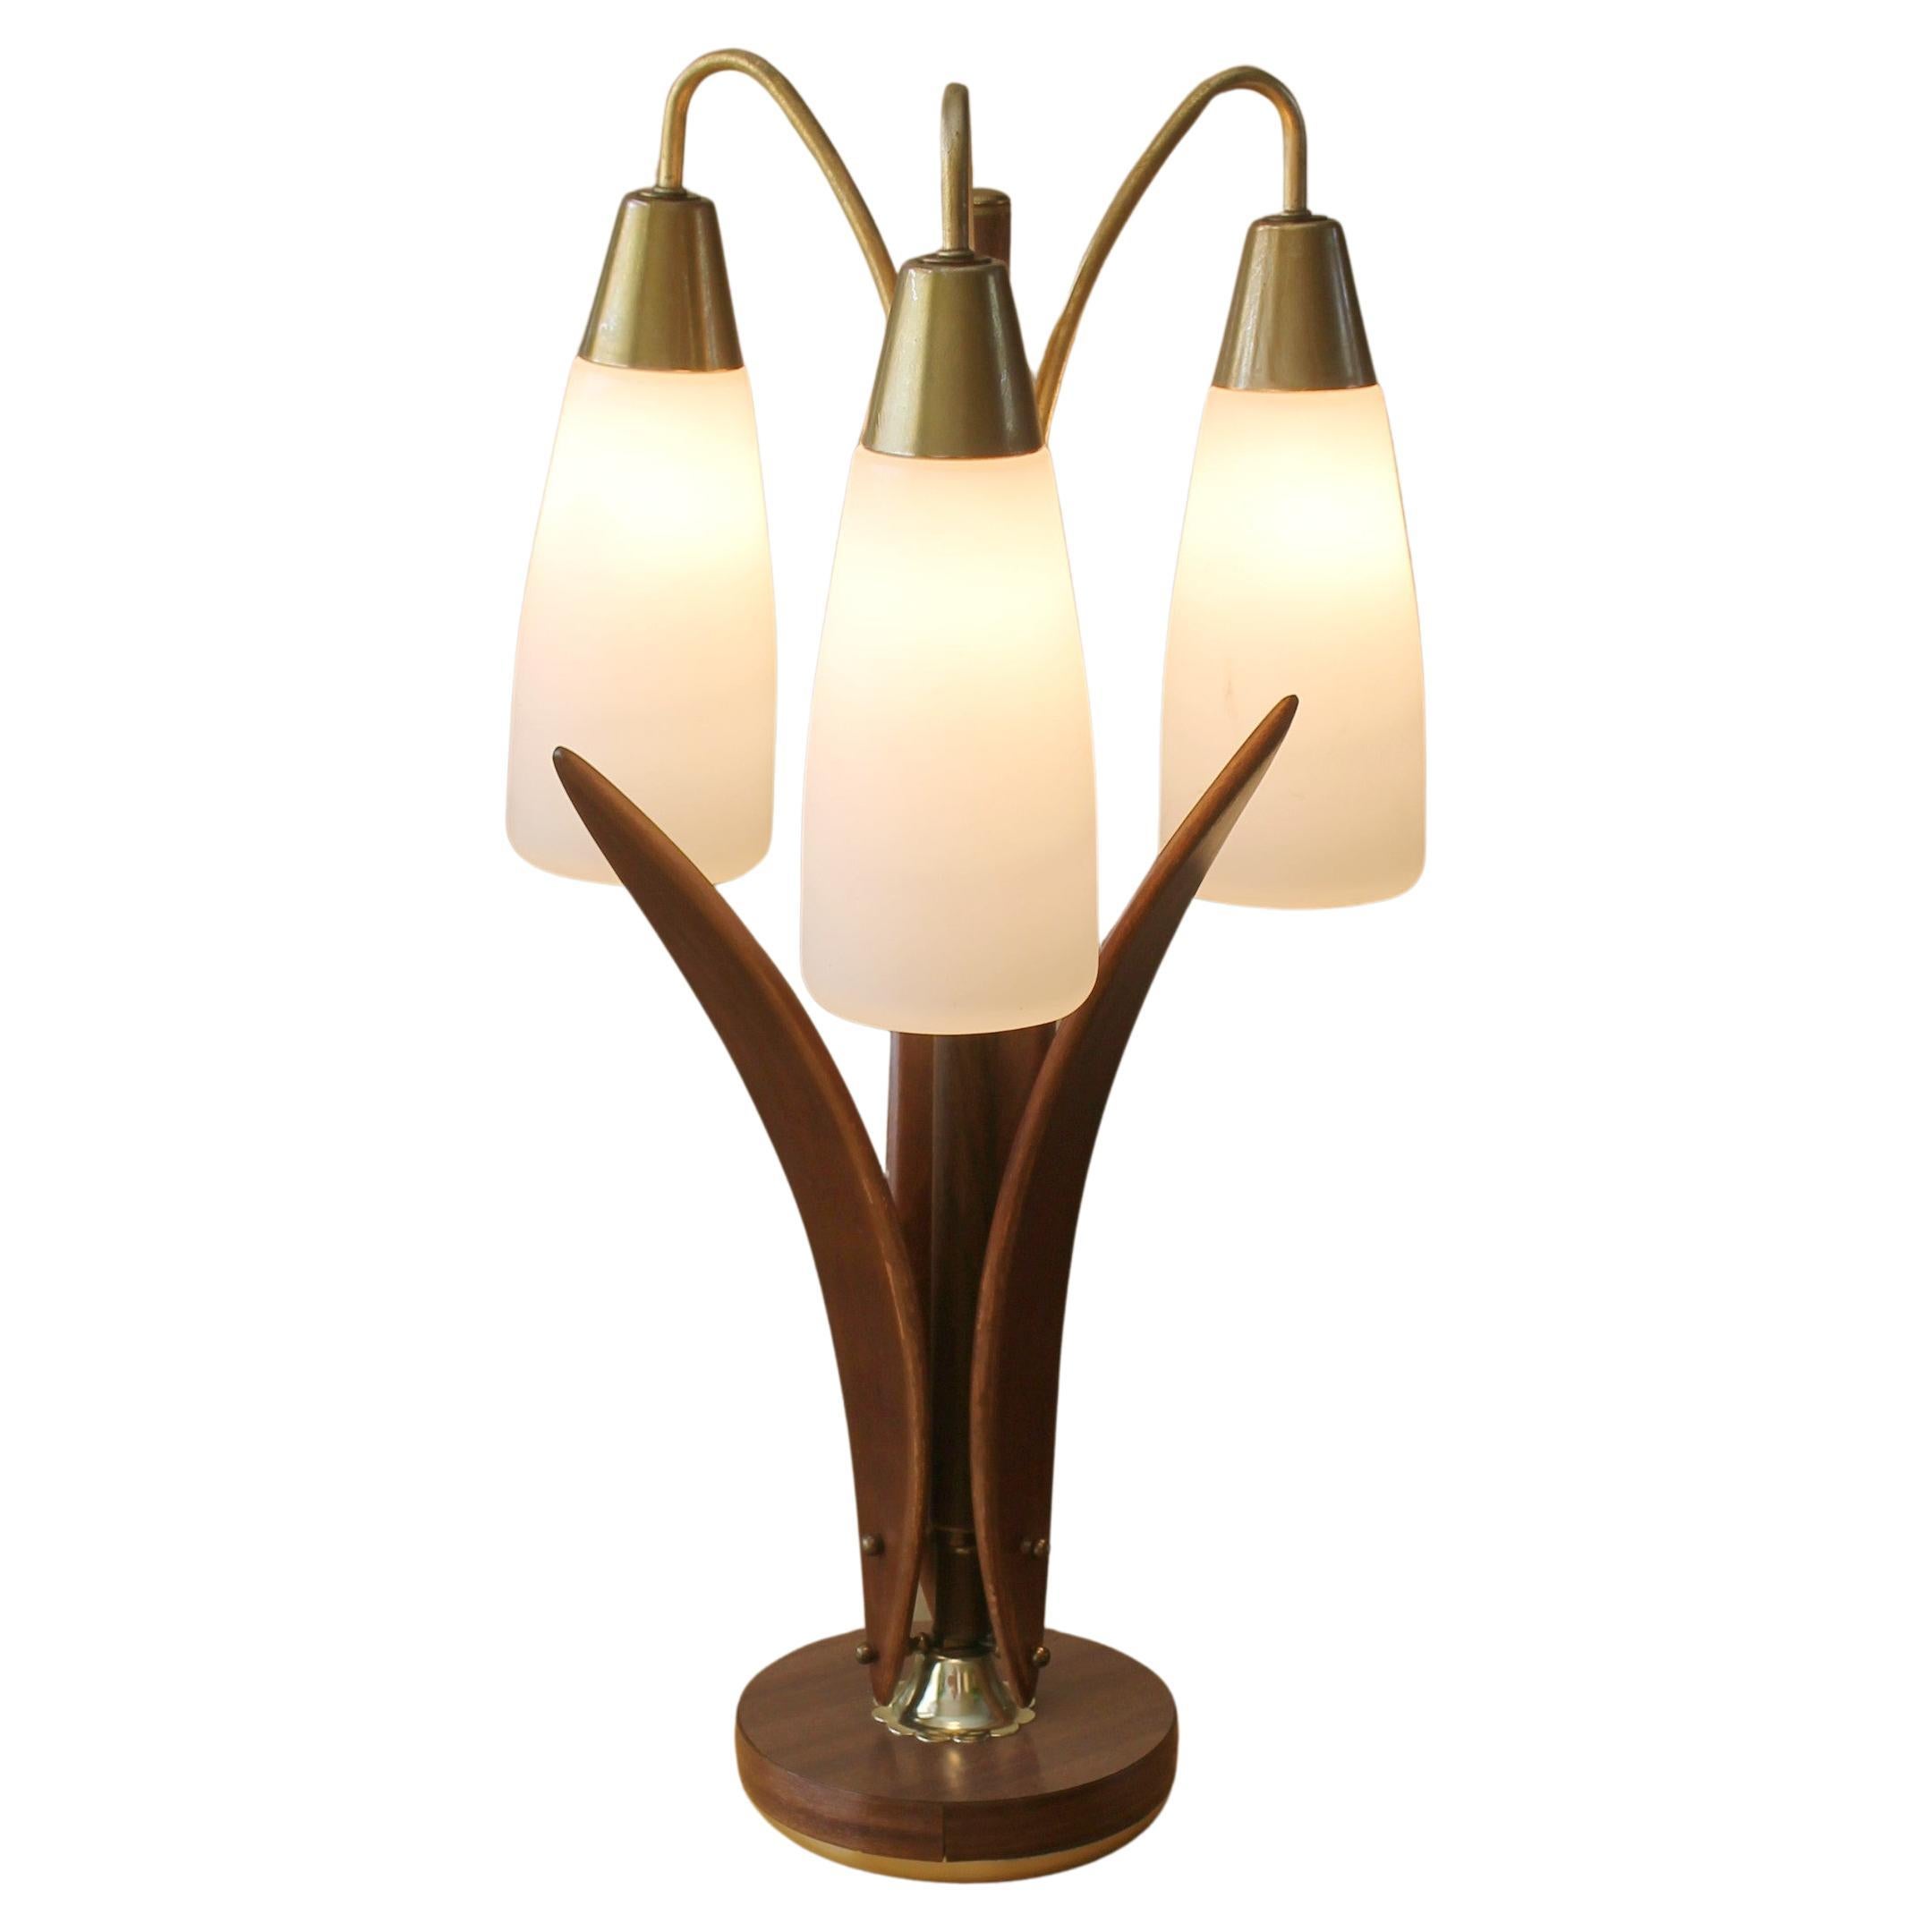 Exquise lampe danoise moderne à 3 abat-jours en verre et noyer 1950s Mid Century Lighting